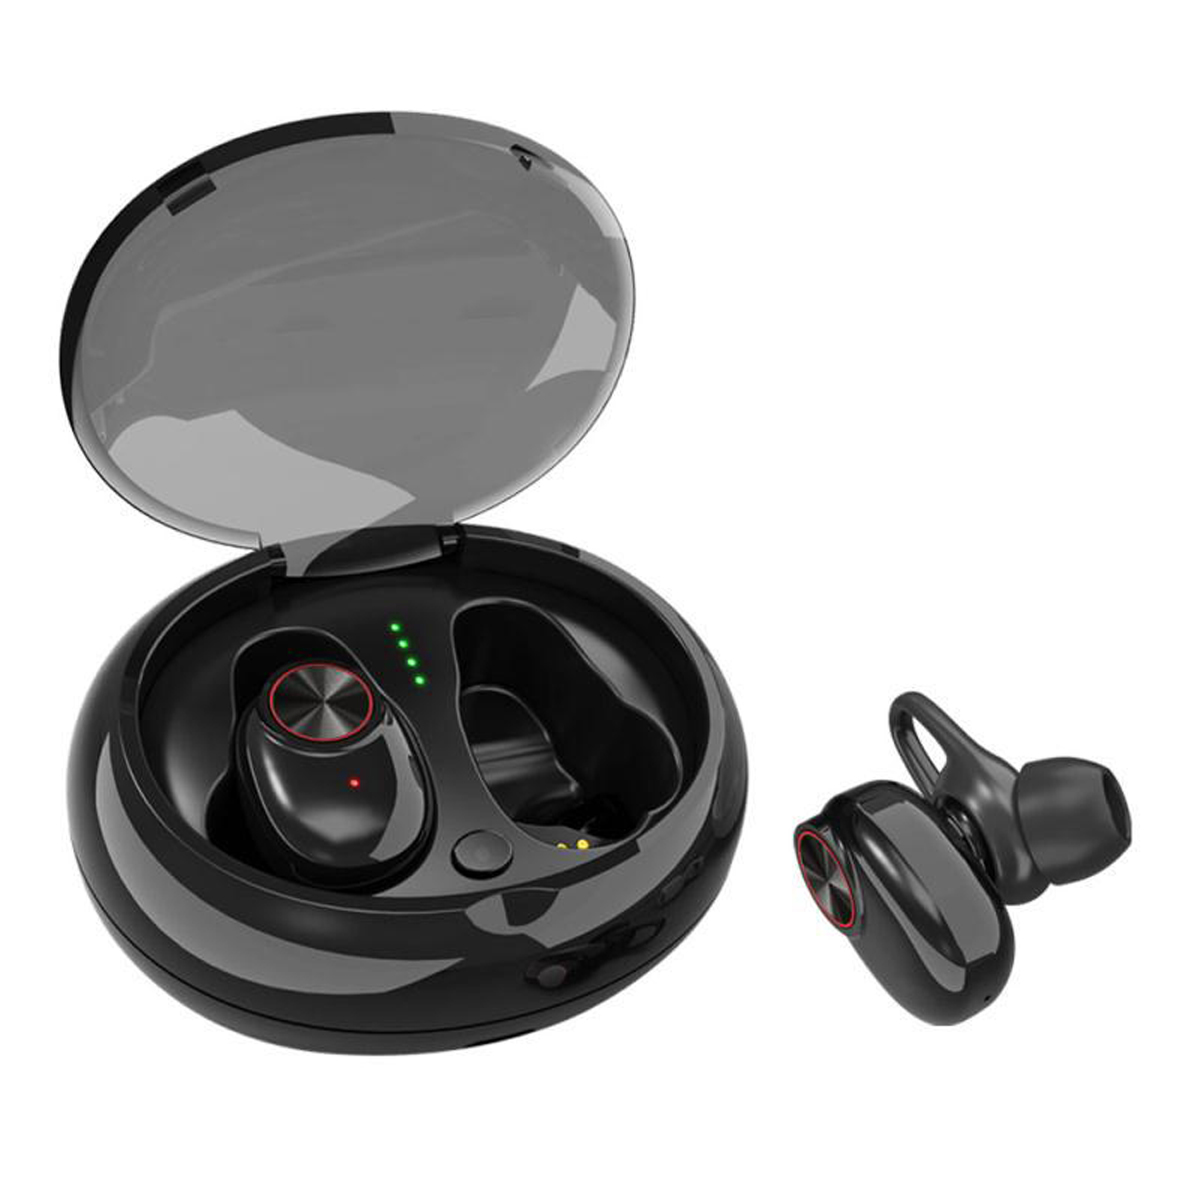 

[bluetooth 5.0] True Wireless Earbuds Noise Cancelling Headphones Deep Bass HD 3D Stereo Surround Waterproof Sports Earphone with Mic